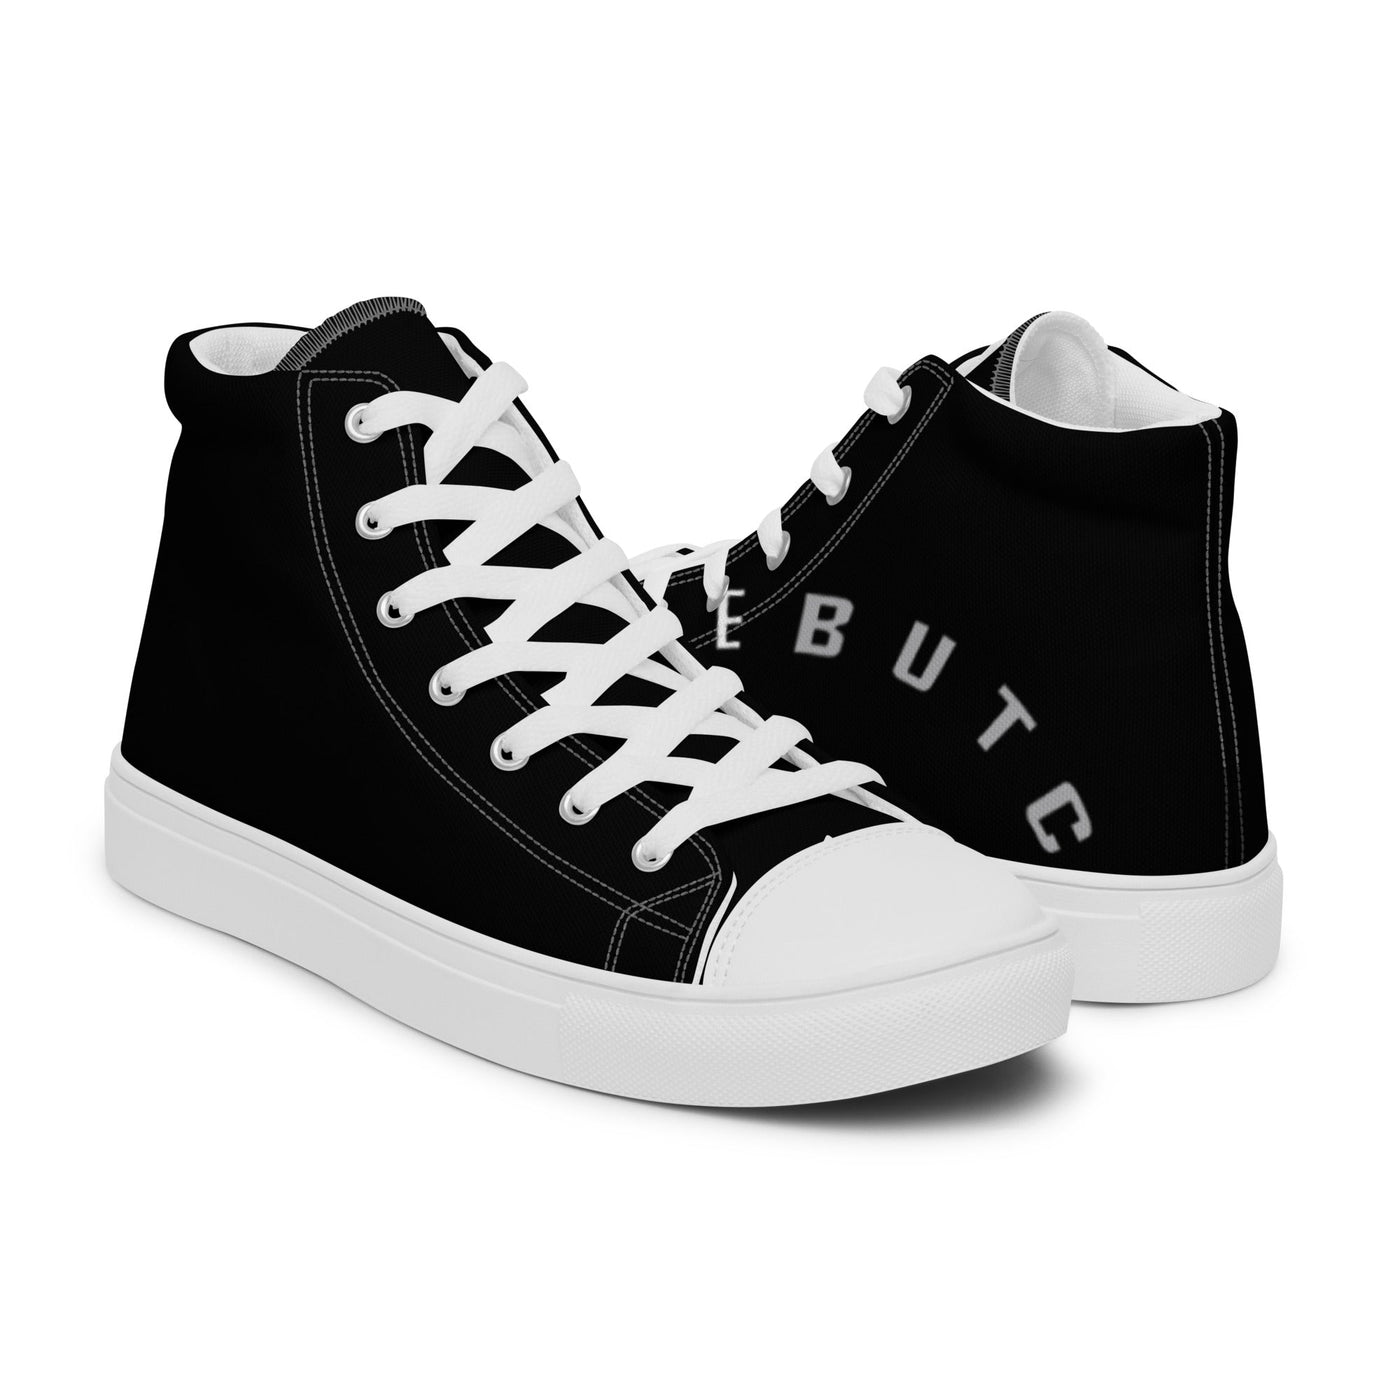 HauteButch Black Canvas High Top Shoes - HAUTEBUTCH